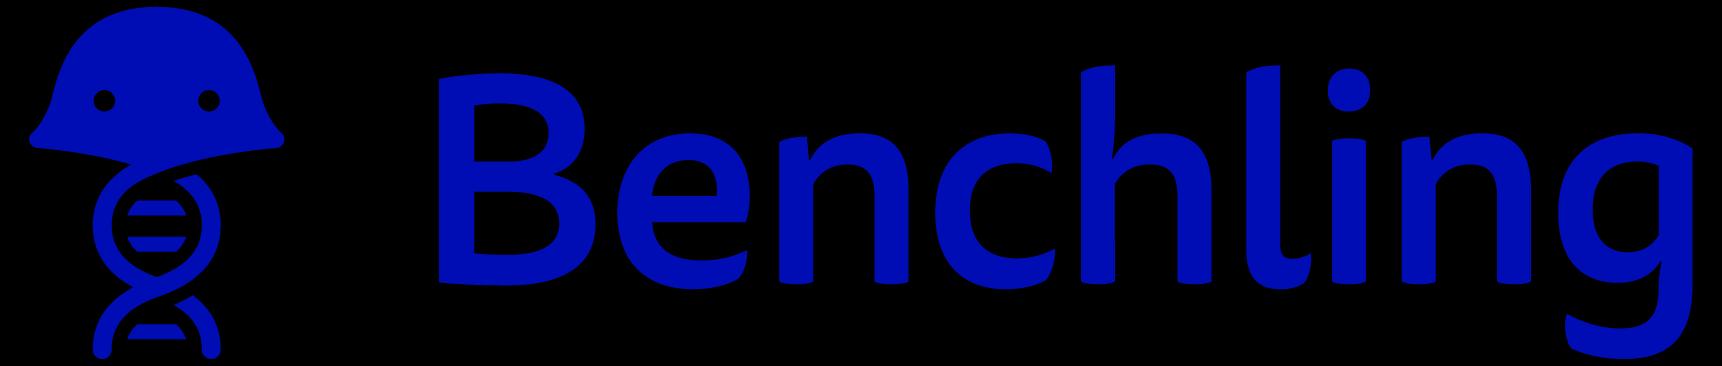 Benchling_logo